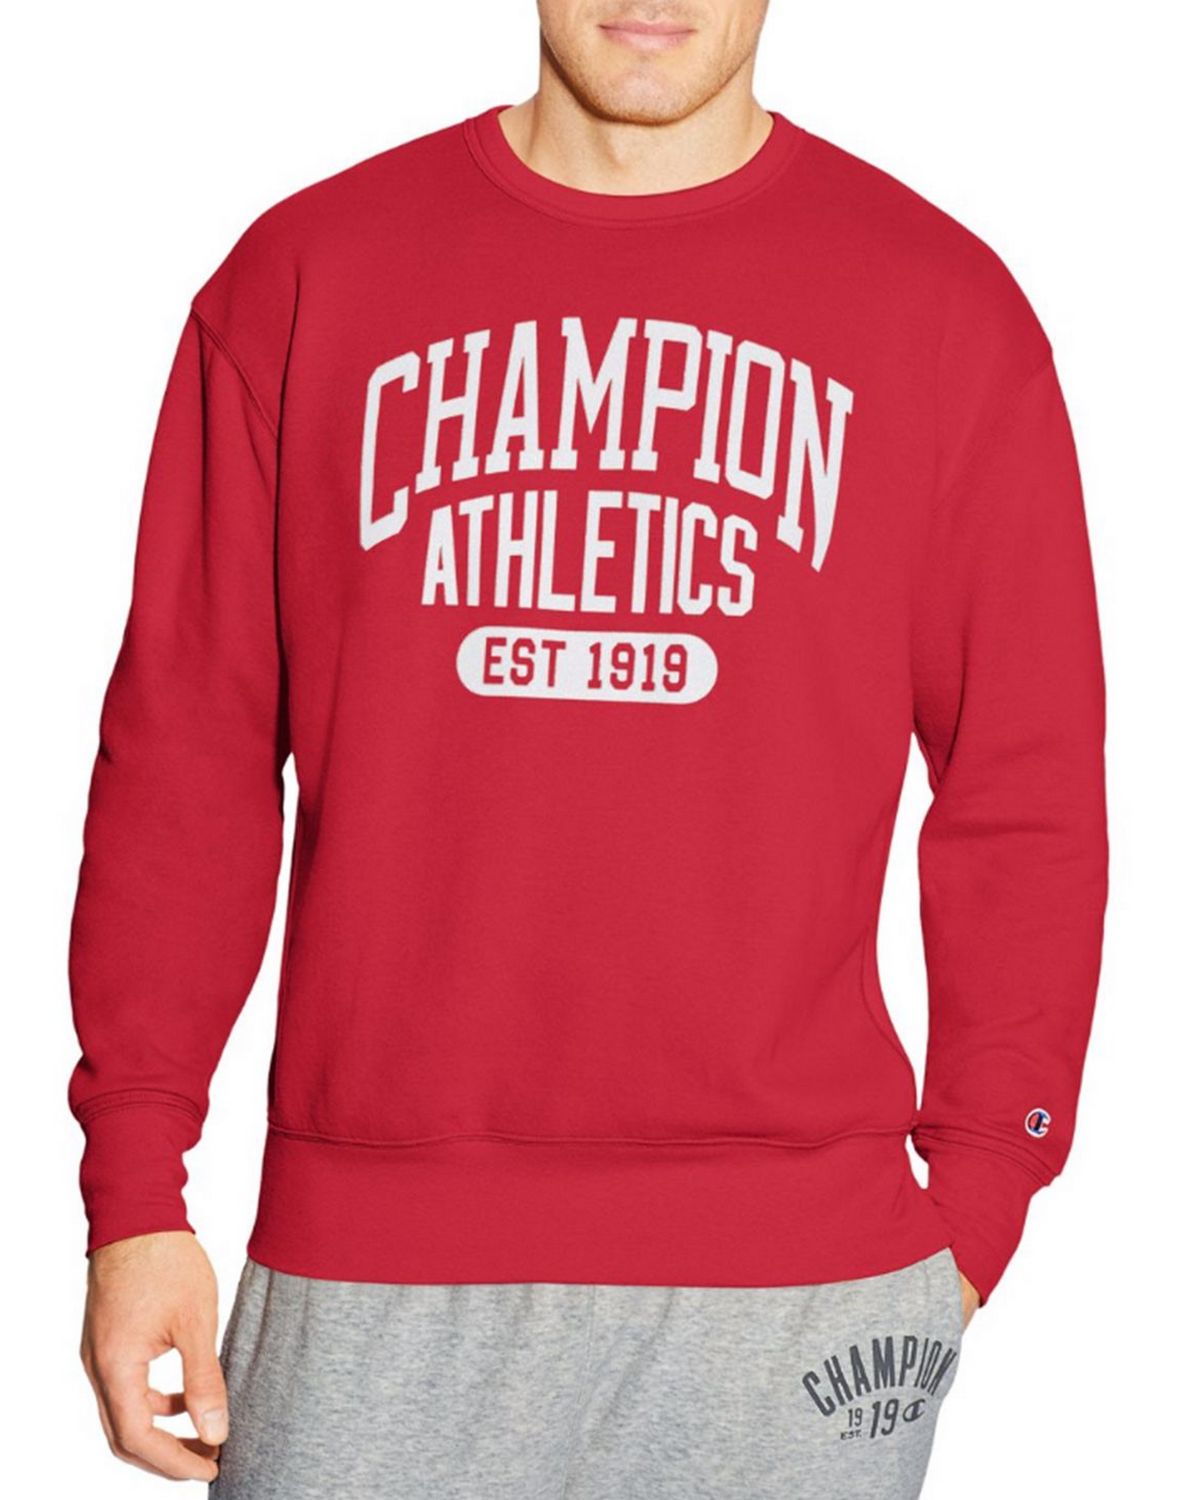 champion athletics sweatshirt